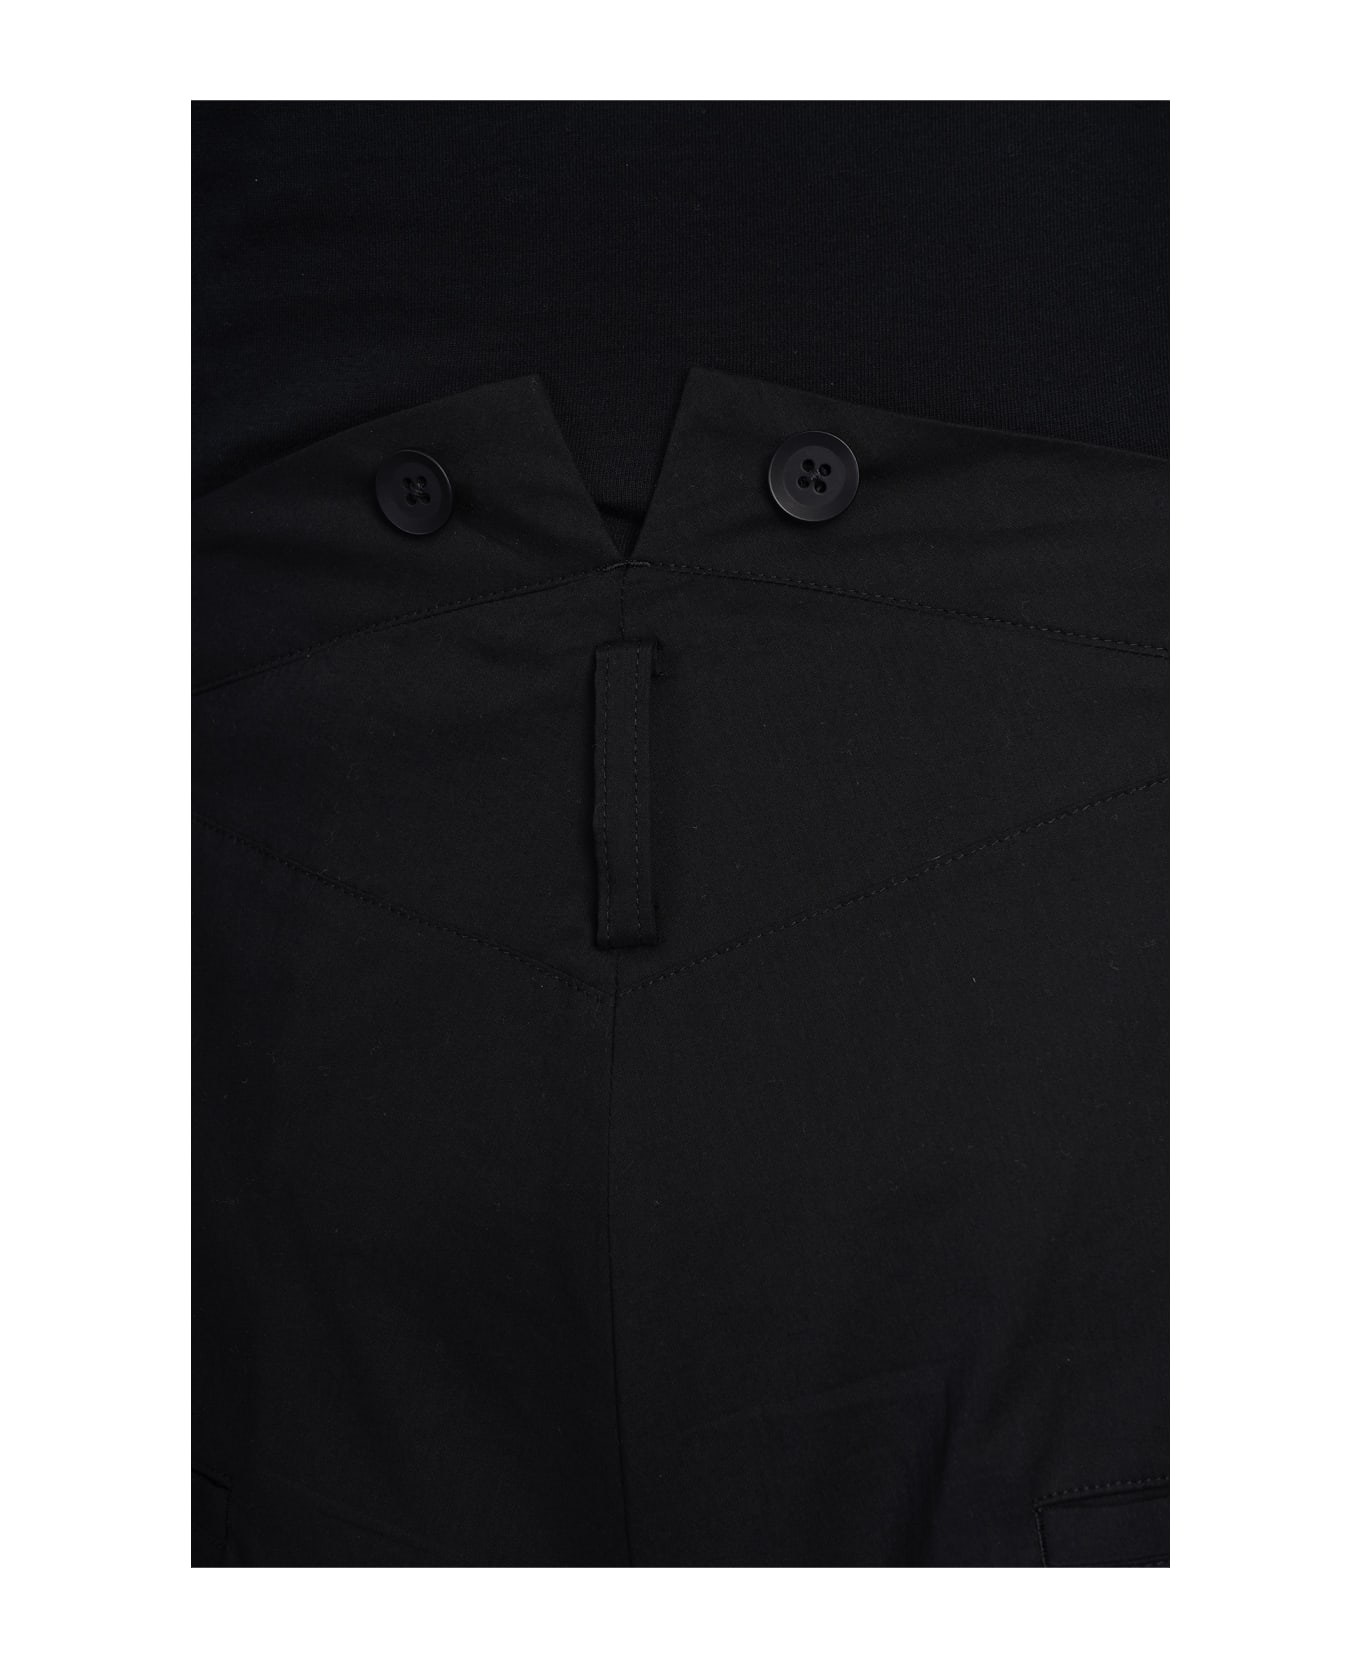 Yohji Yamamoto Pants In Black Cotton - black